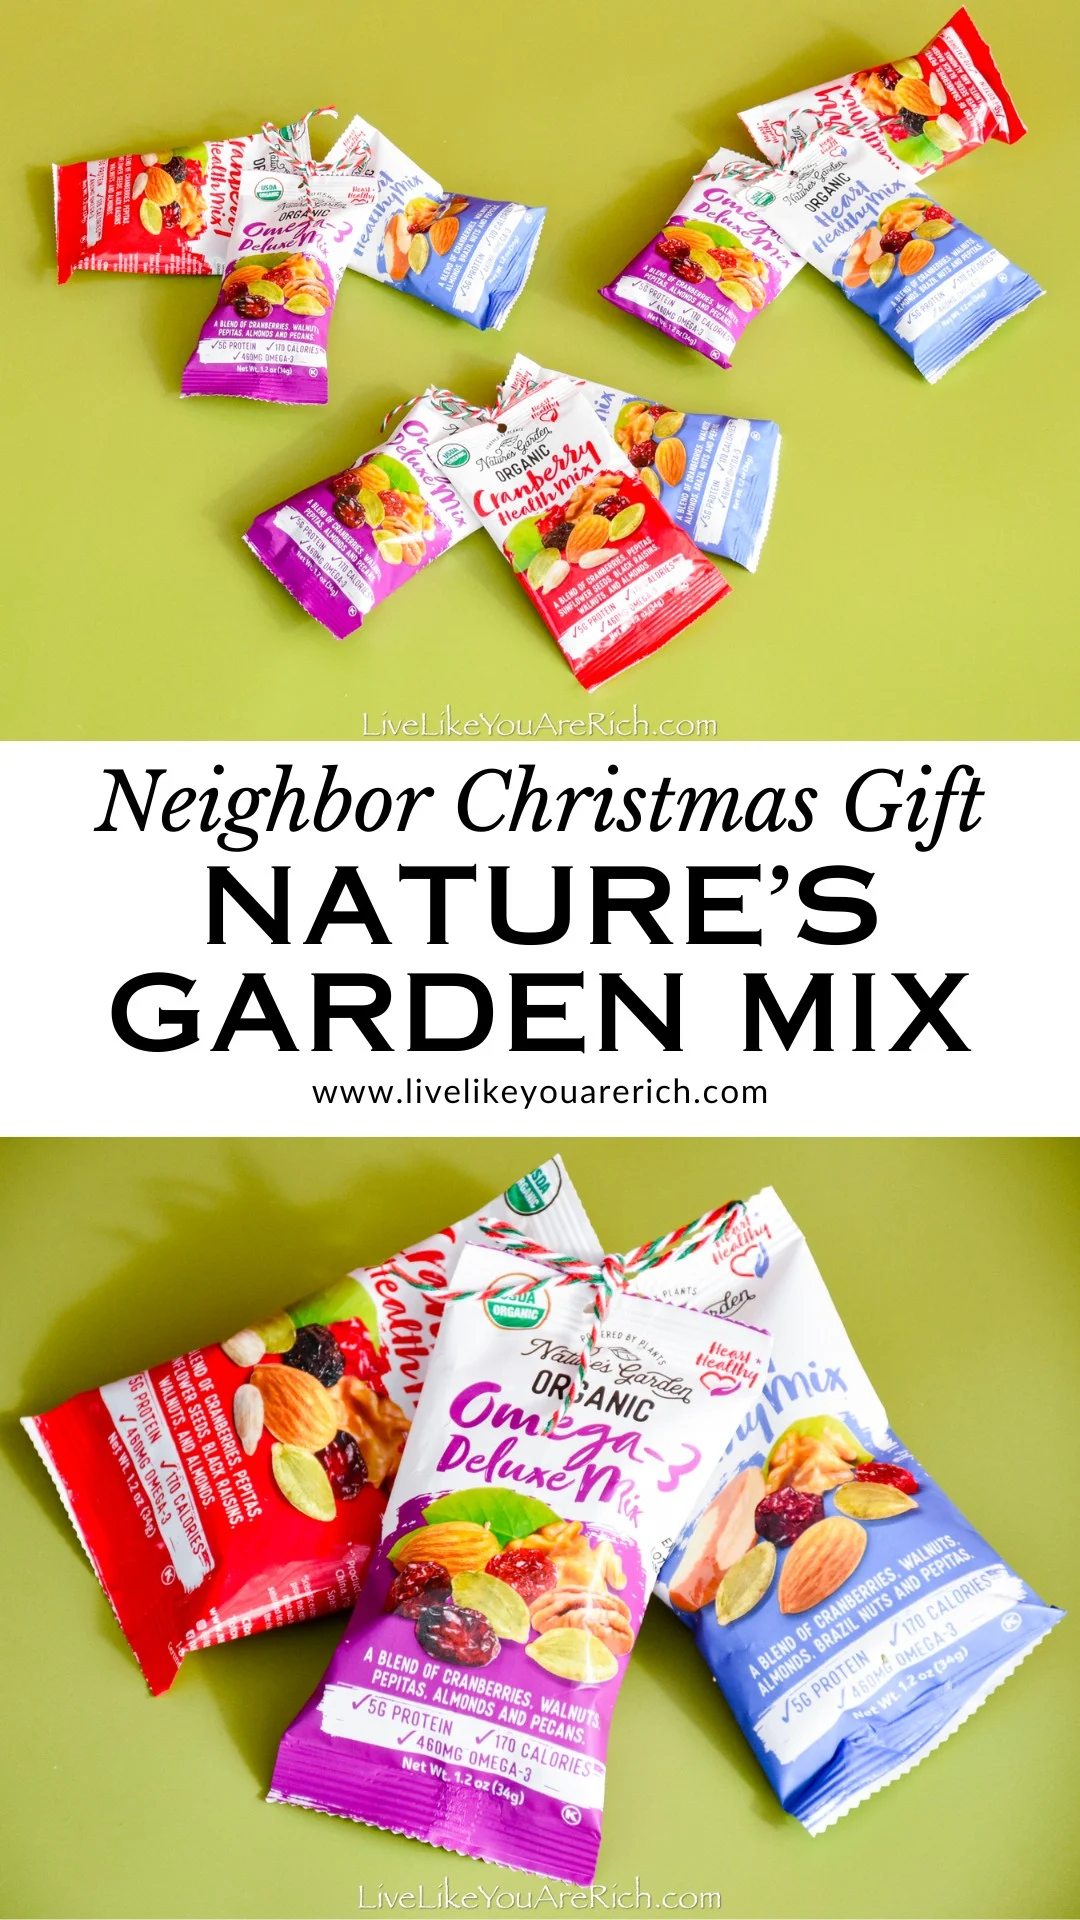 Neighbor Christmas Gift: Nature's Garden Mix